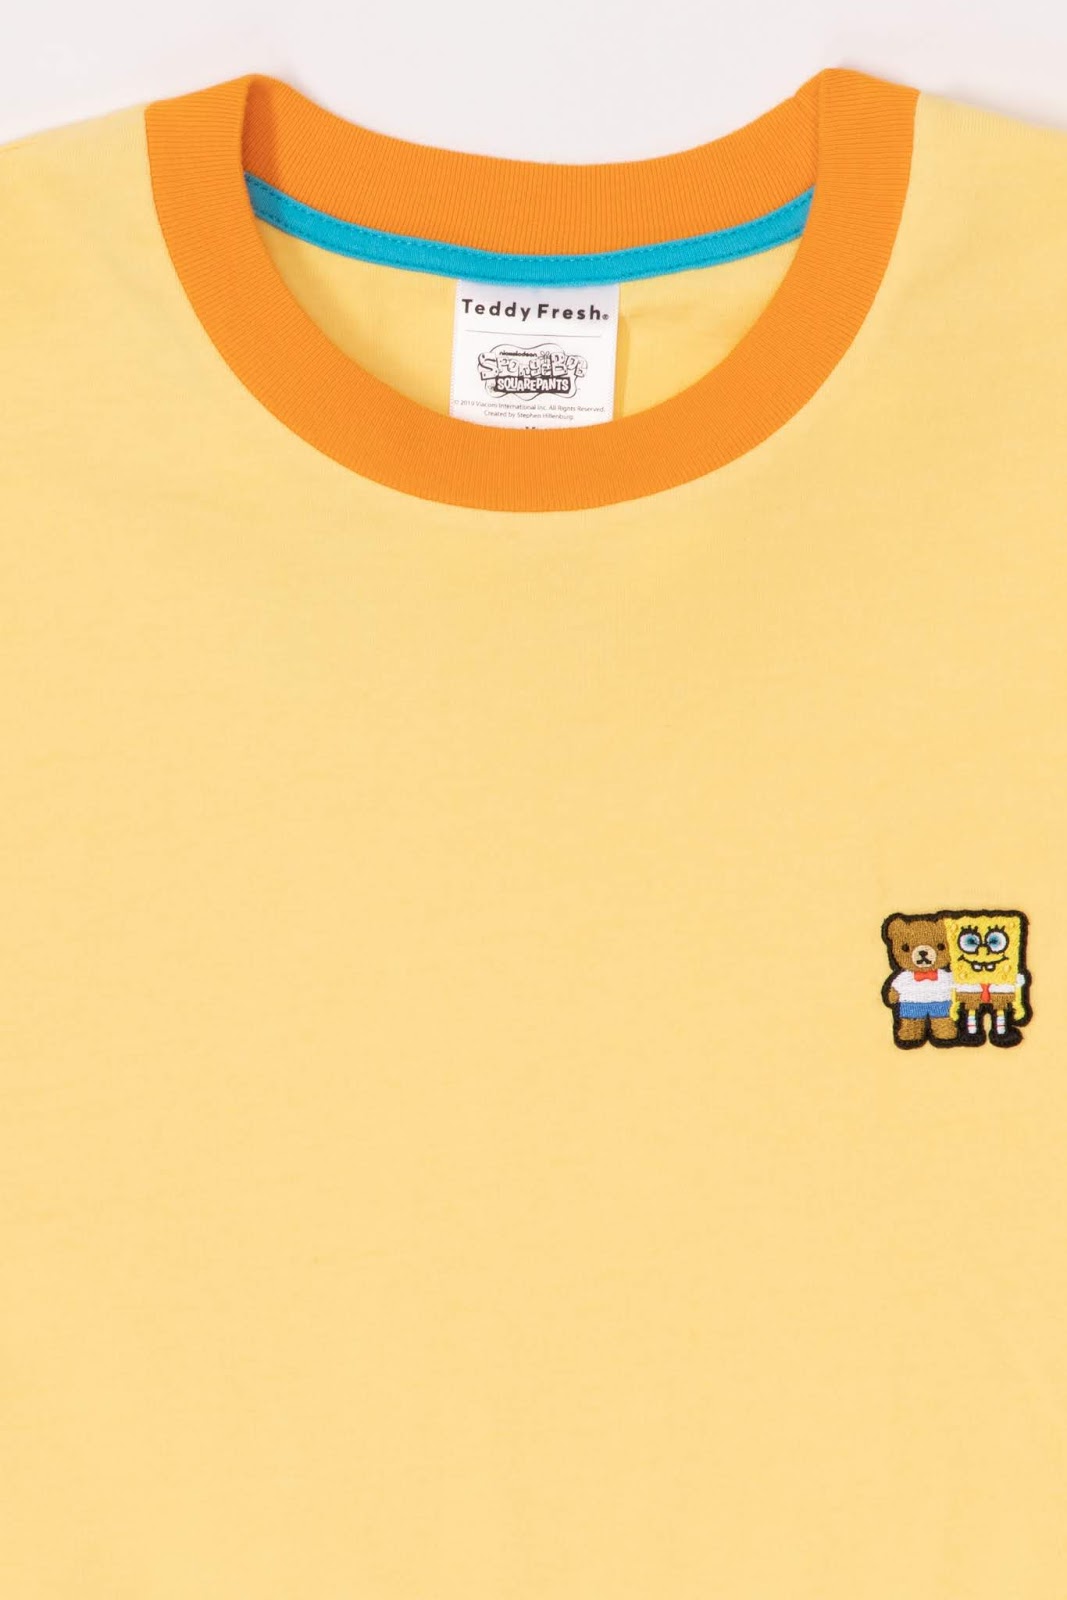 NickALive!: ‘Teddy Fresh’ Streetwear Brand Releases SpongeBob ...